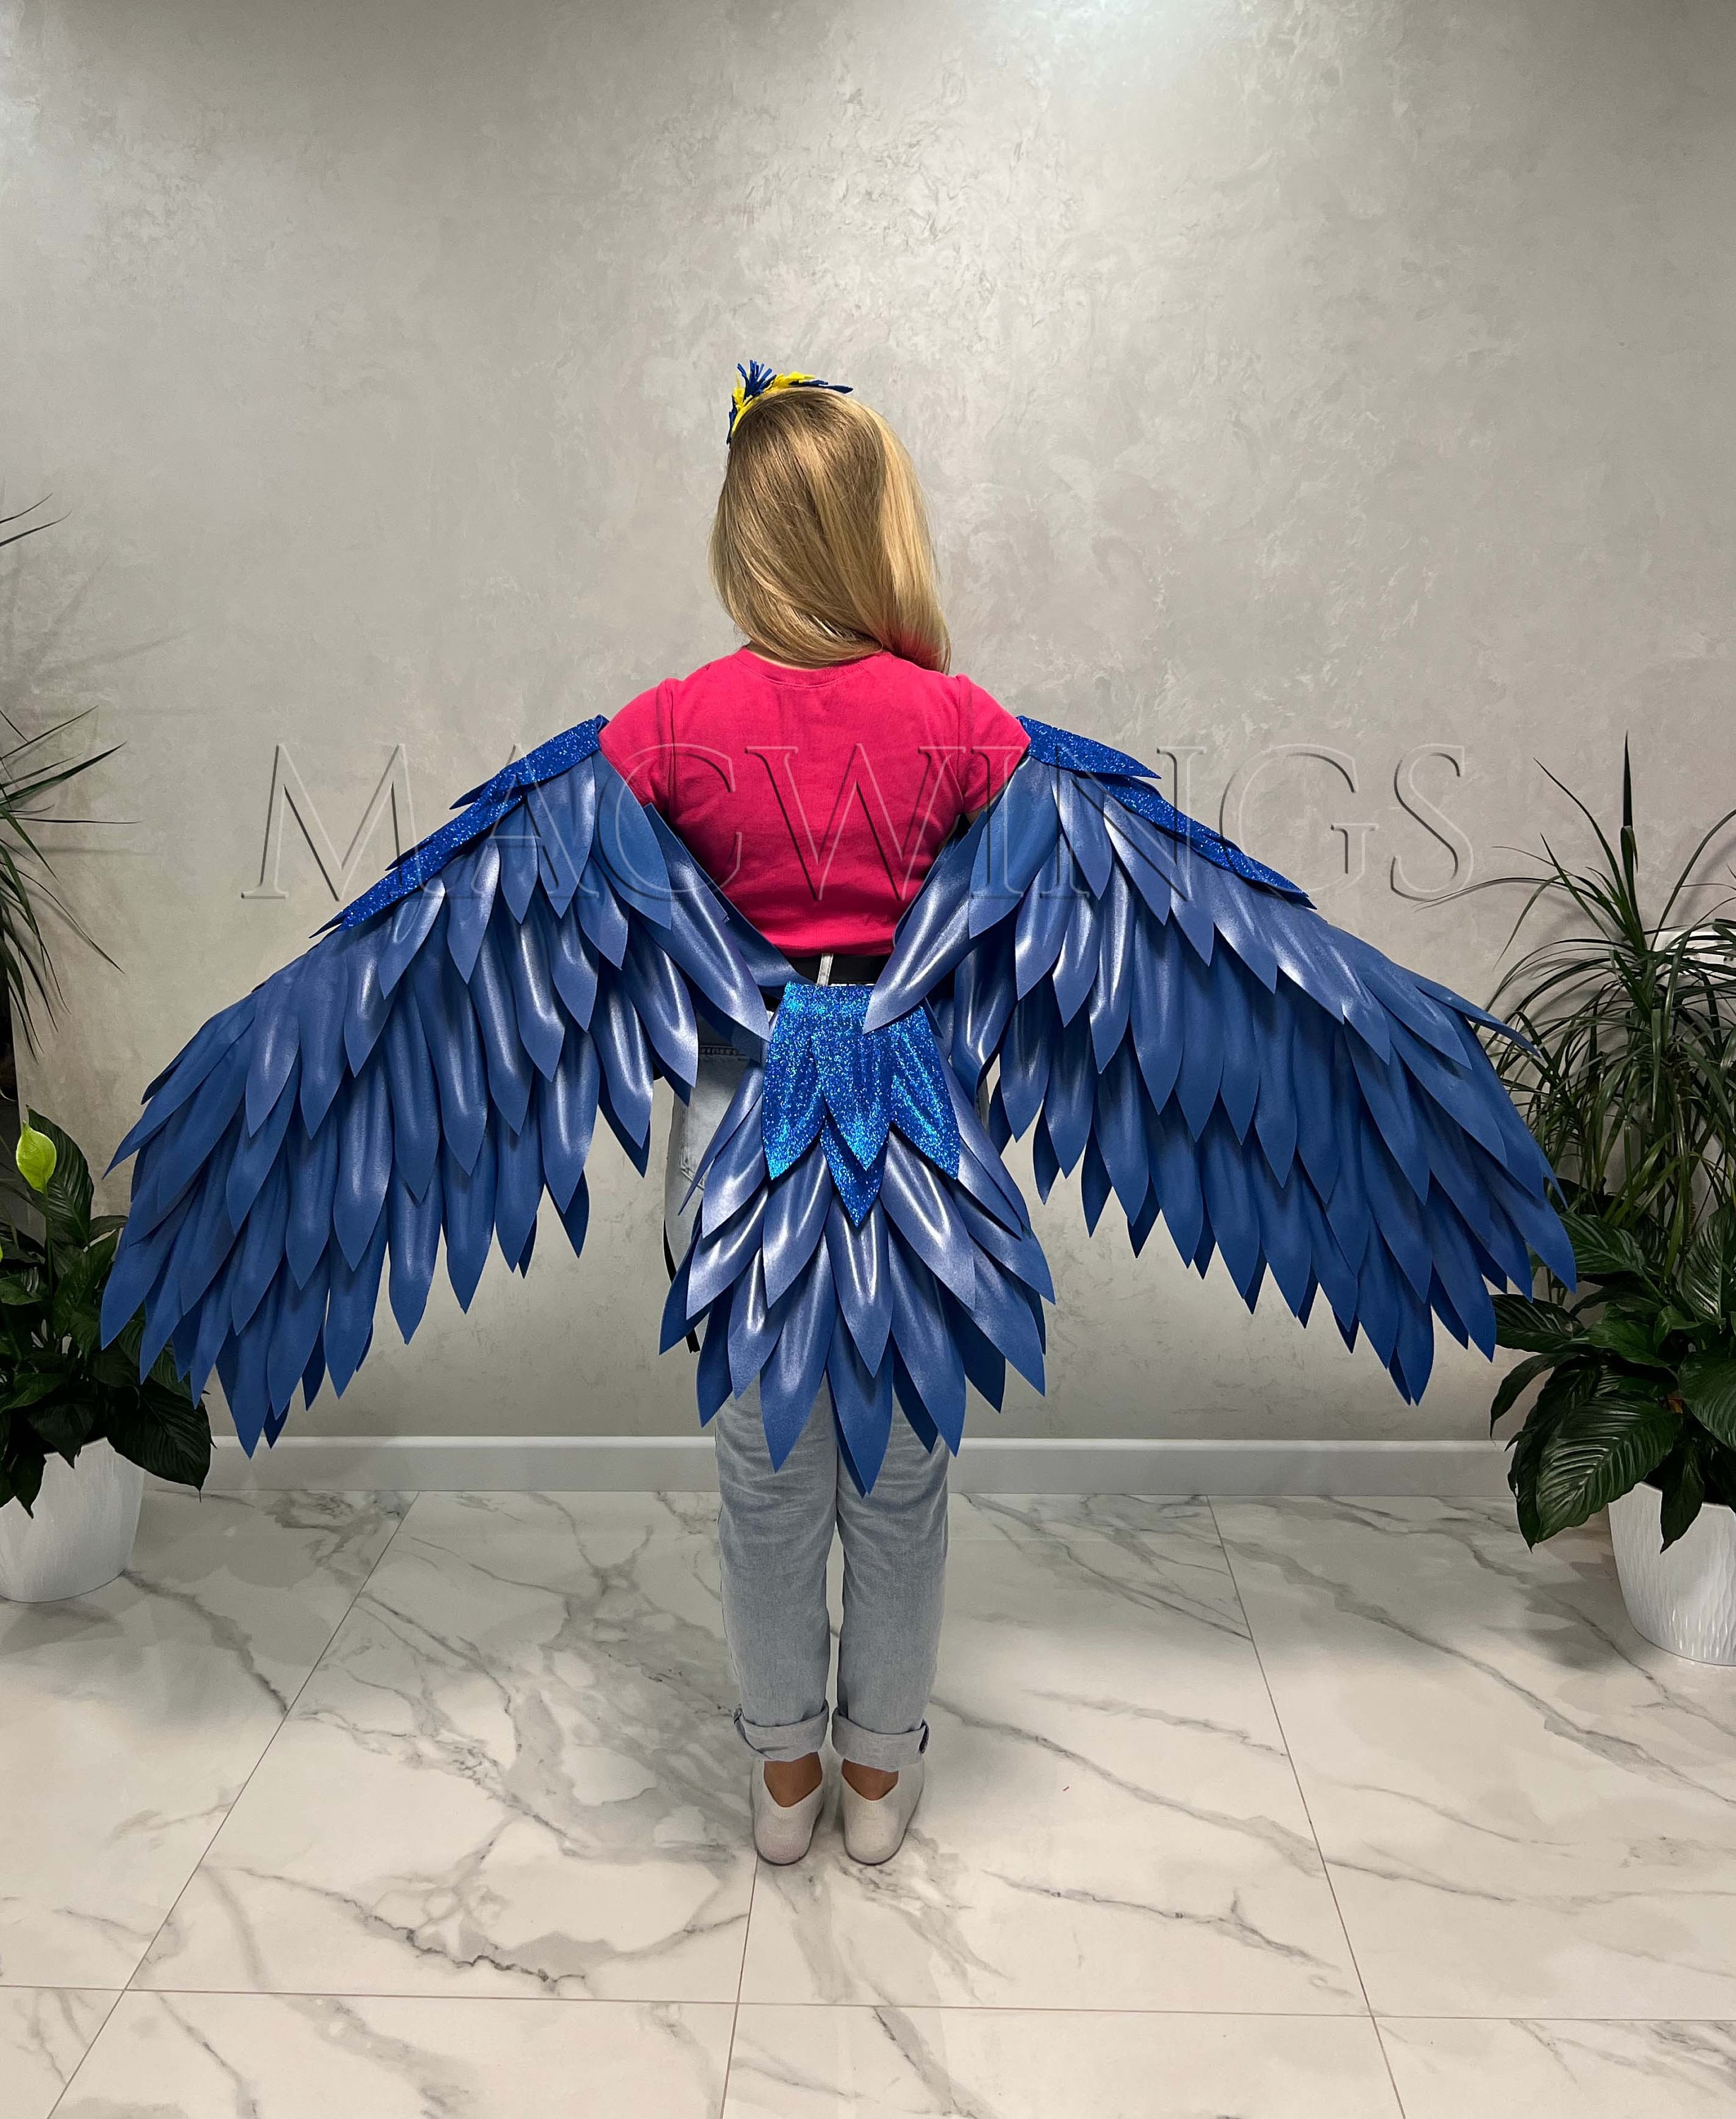 Blue Owl Costume, Bird Wings, Arms Wings, Bird Costume Cosplay, Blue Bird  Costume, Wings for Arms, Halloween Costume, Dark Blue Bird -  Sweden